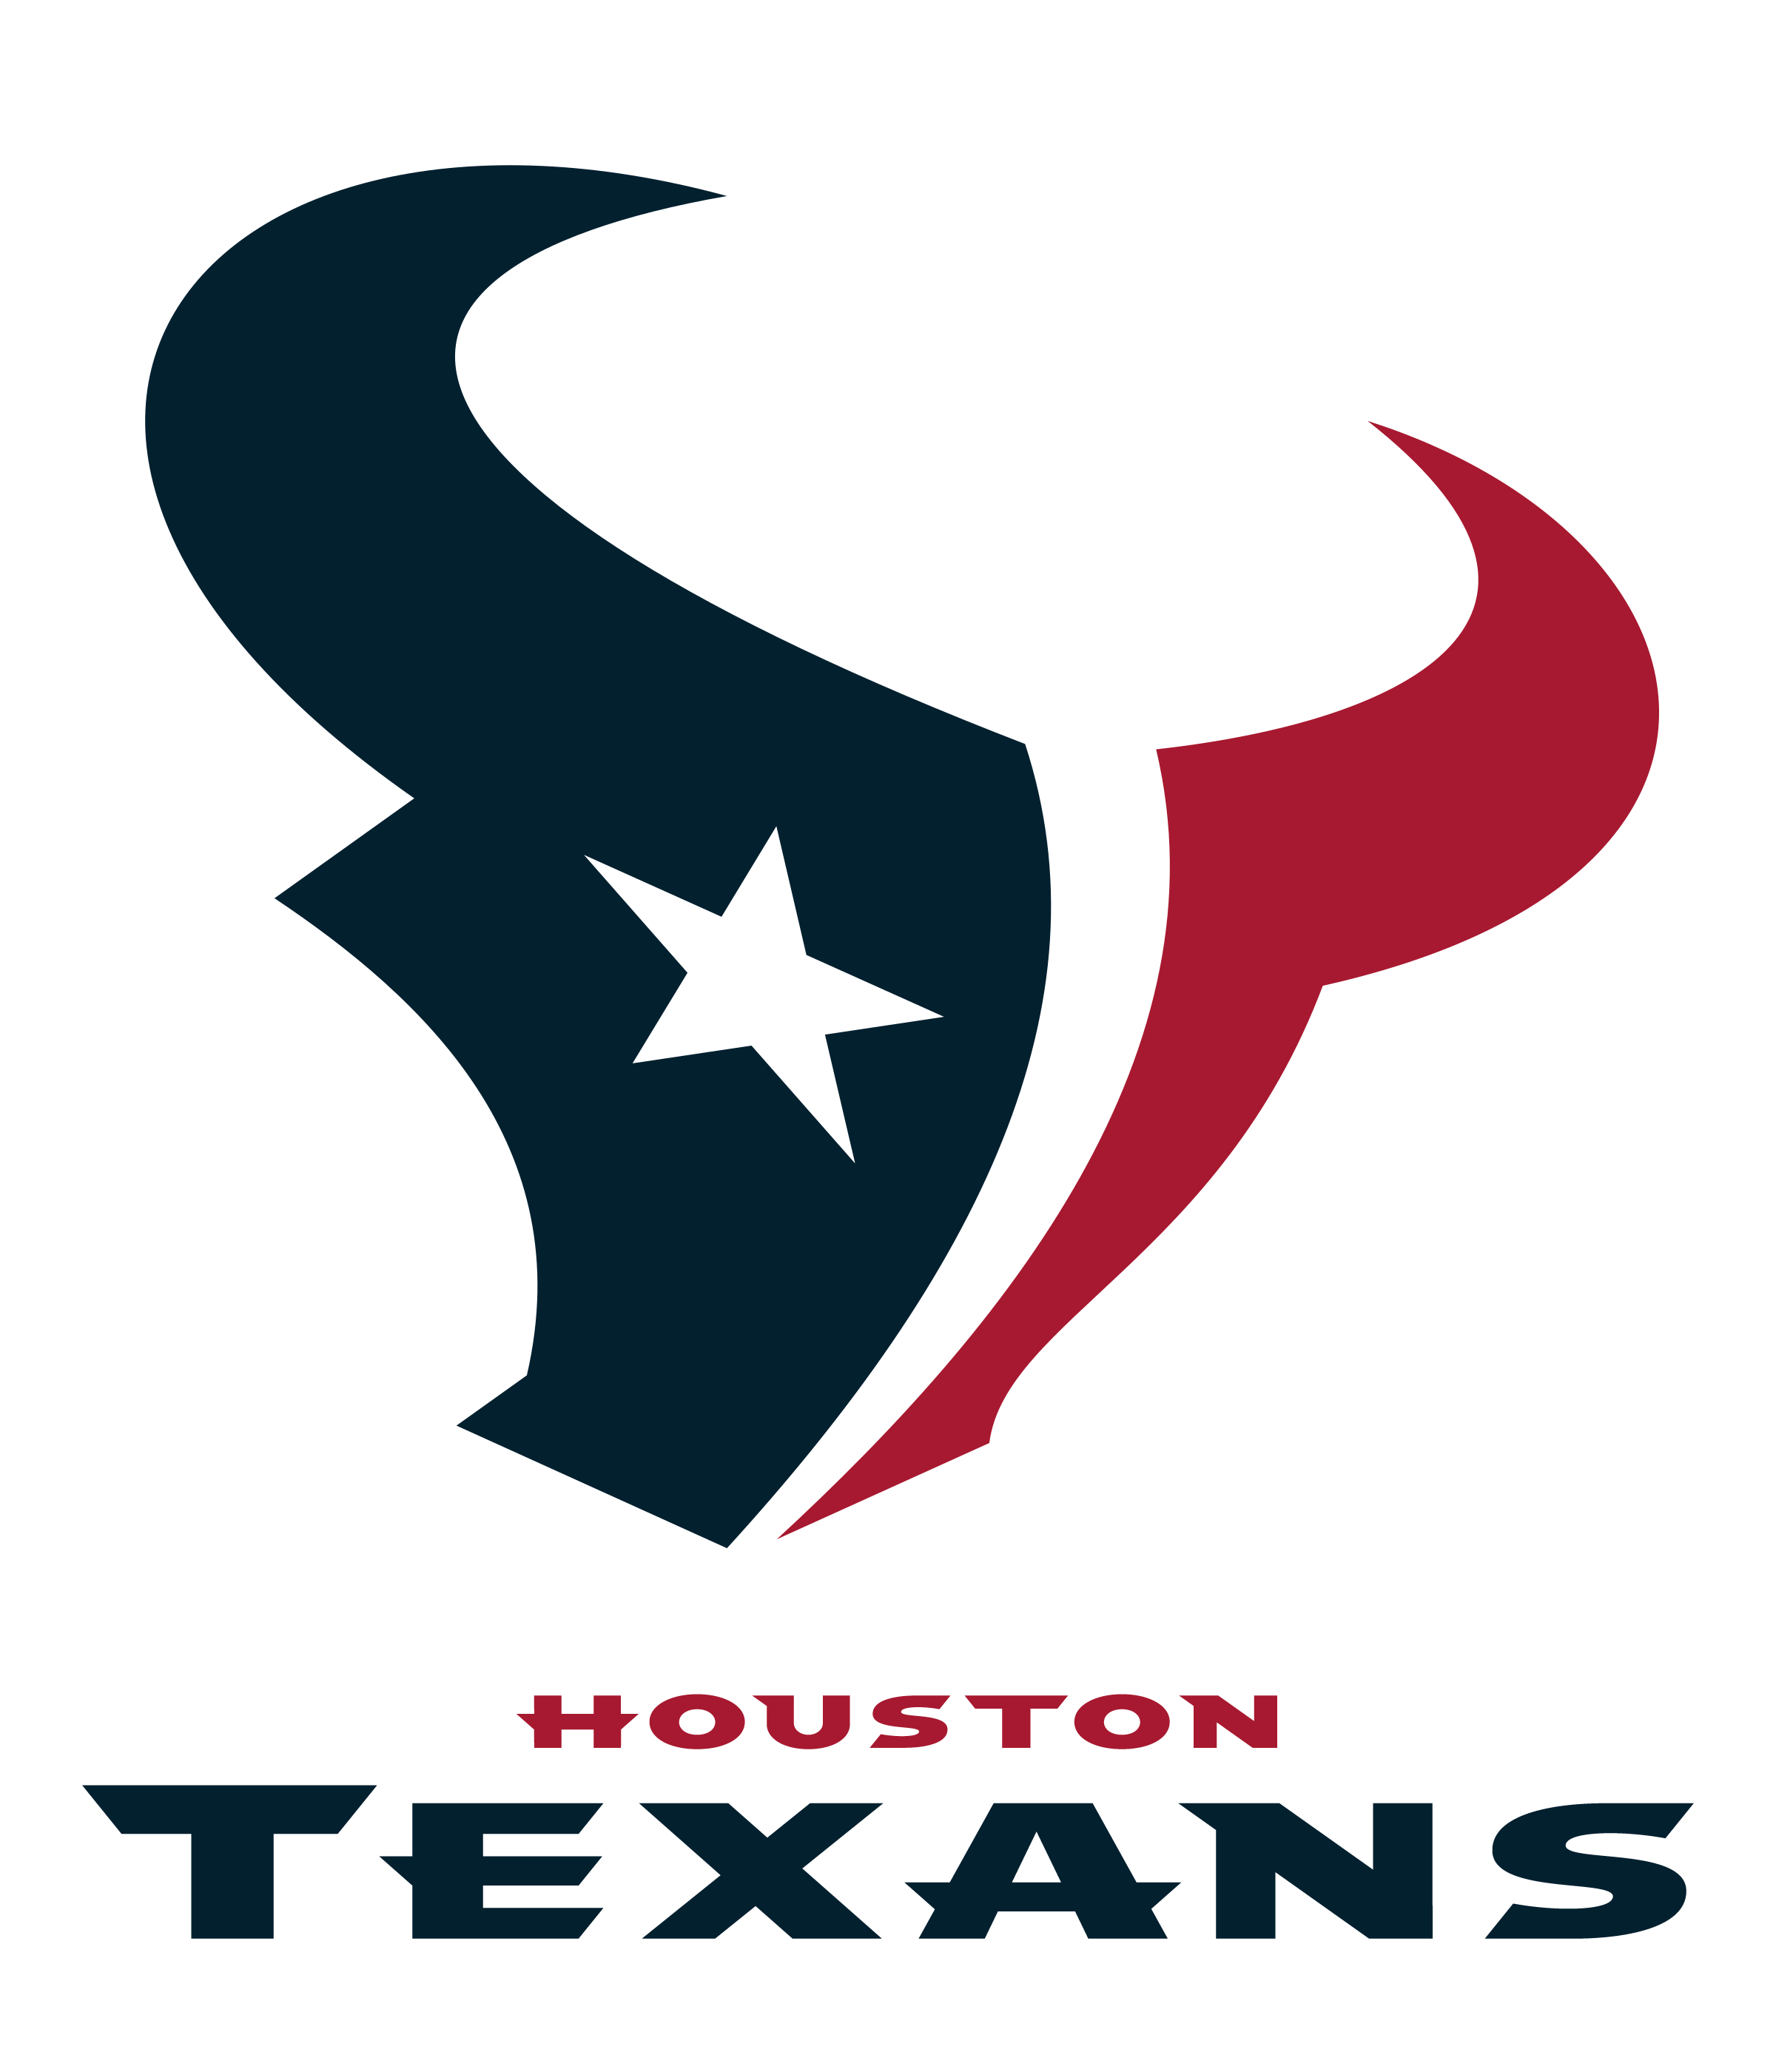 Texans Logo - Houston Texans Logo PNG Transparent & SVG Vector - Freebie Supply